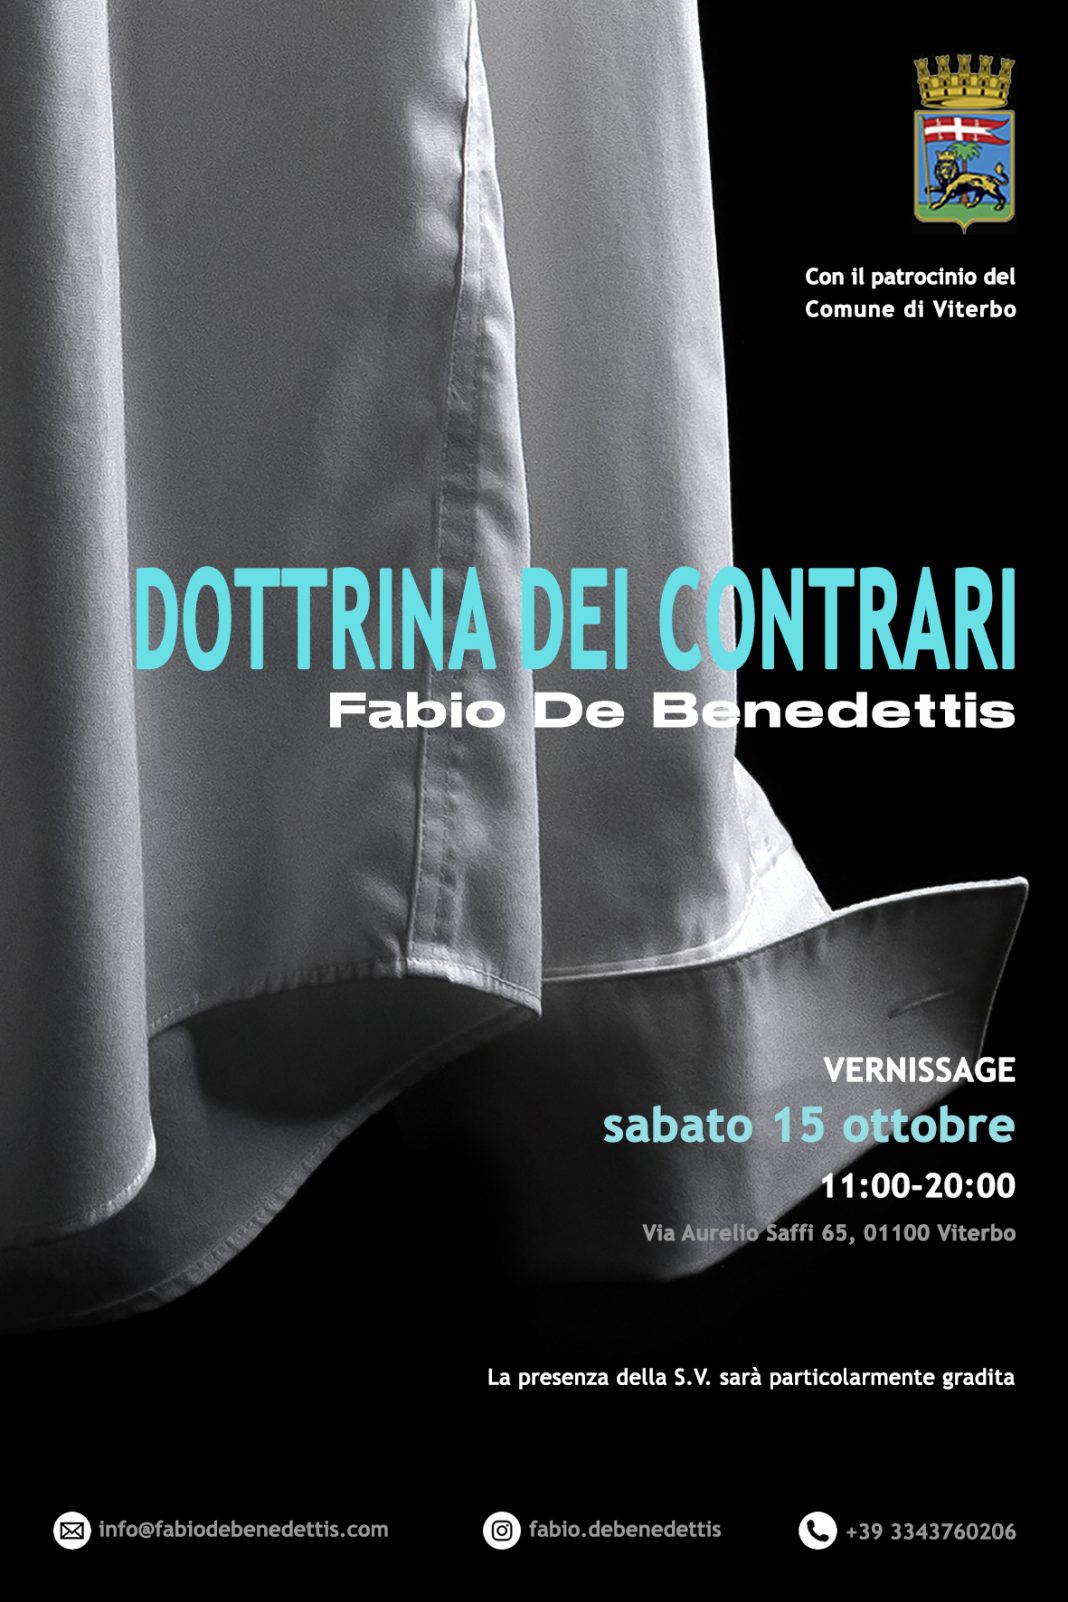 Dottrina dei contrarihttps://www.exibart.com/repository/media/formidable/11/img/e6d/10x15-1068x1602.jpg